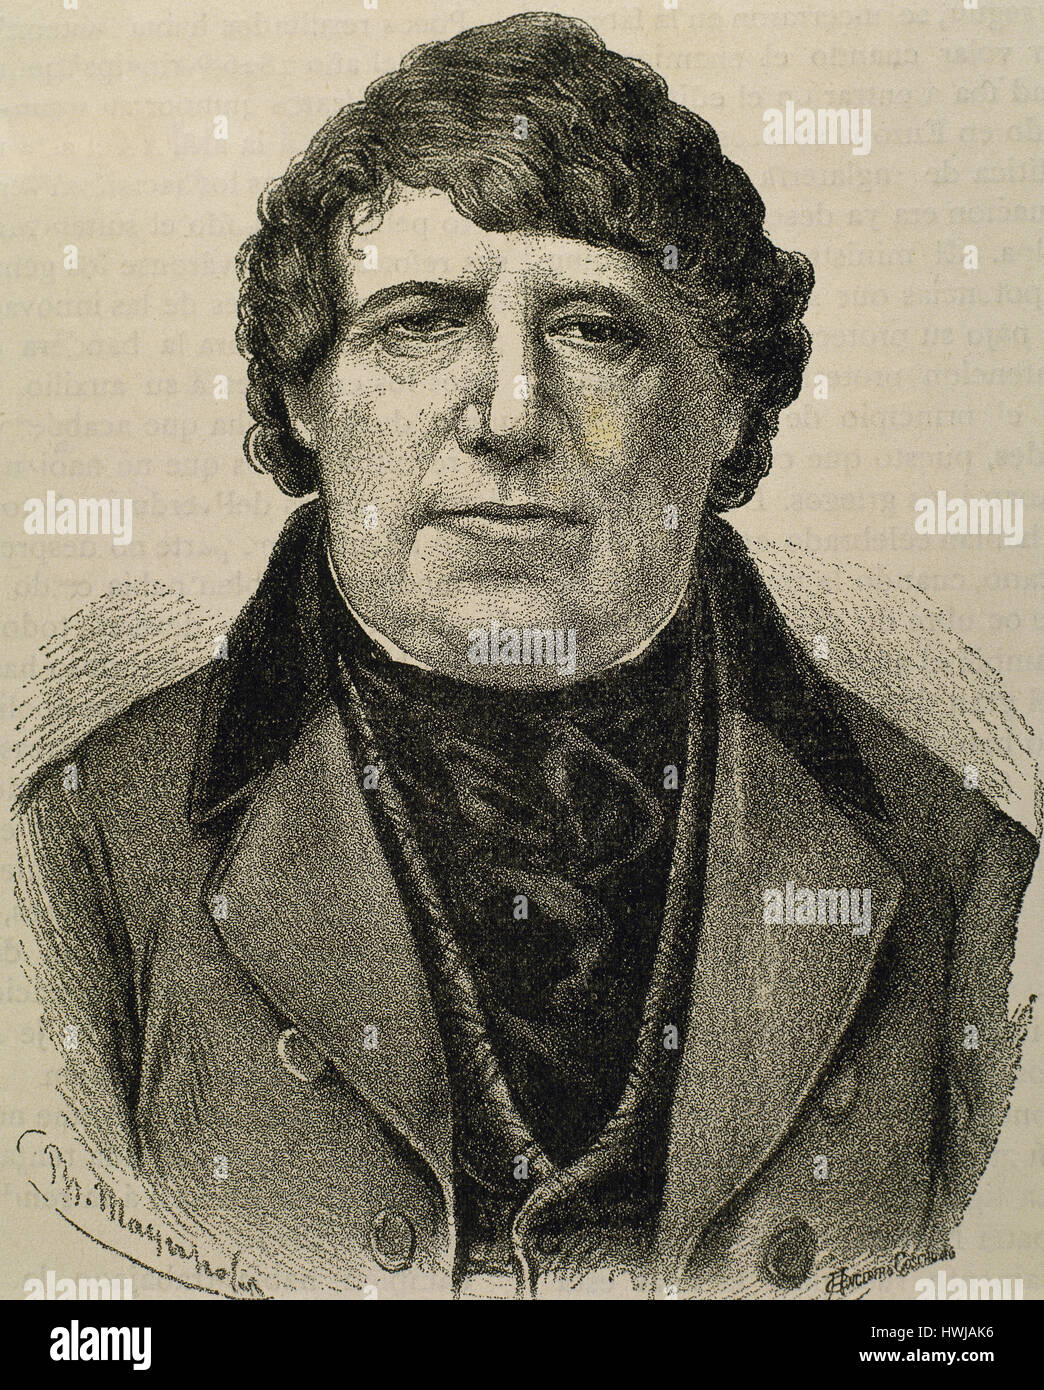 Daniel O'Connell (1775-1847). Irischer Politiker. Porträt. Gravur. Stockfoto